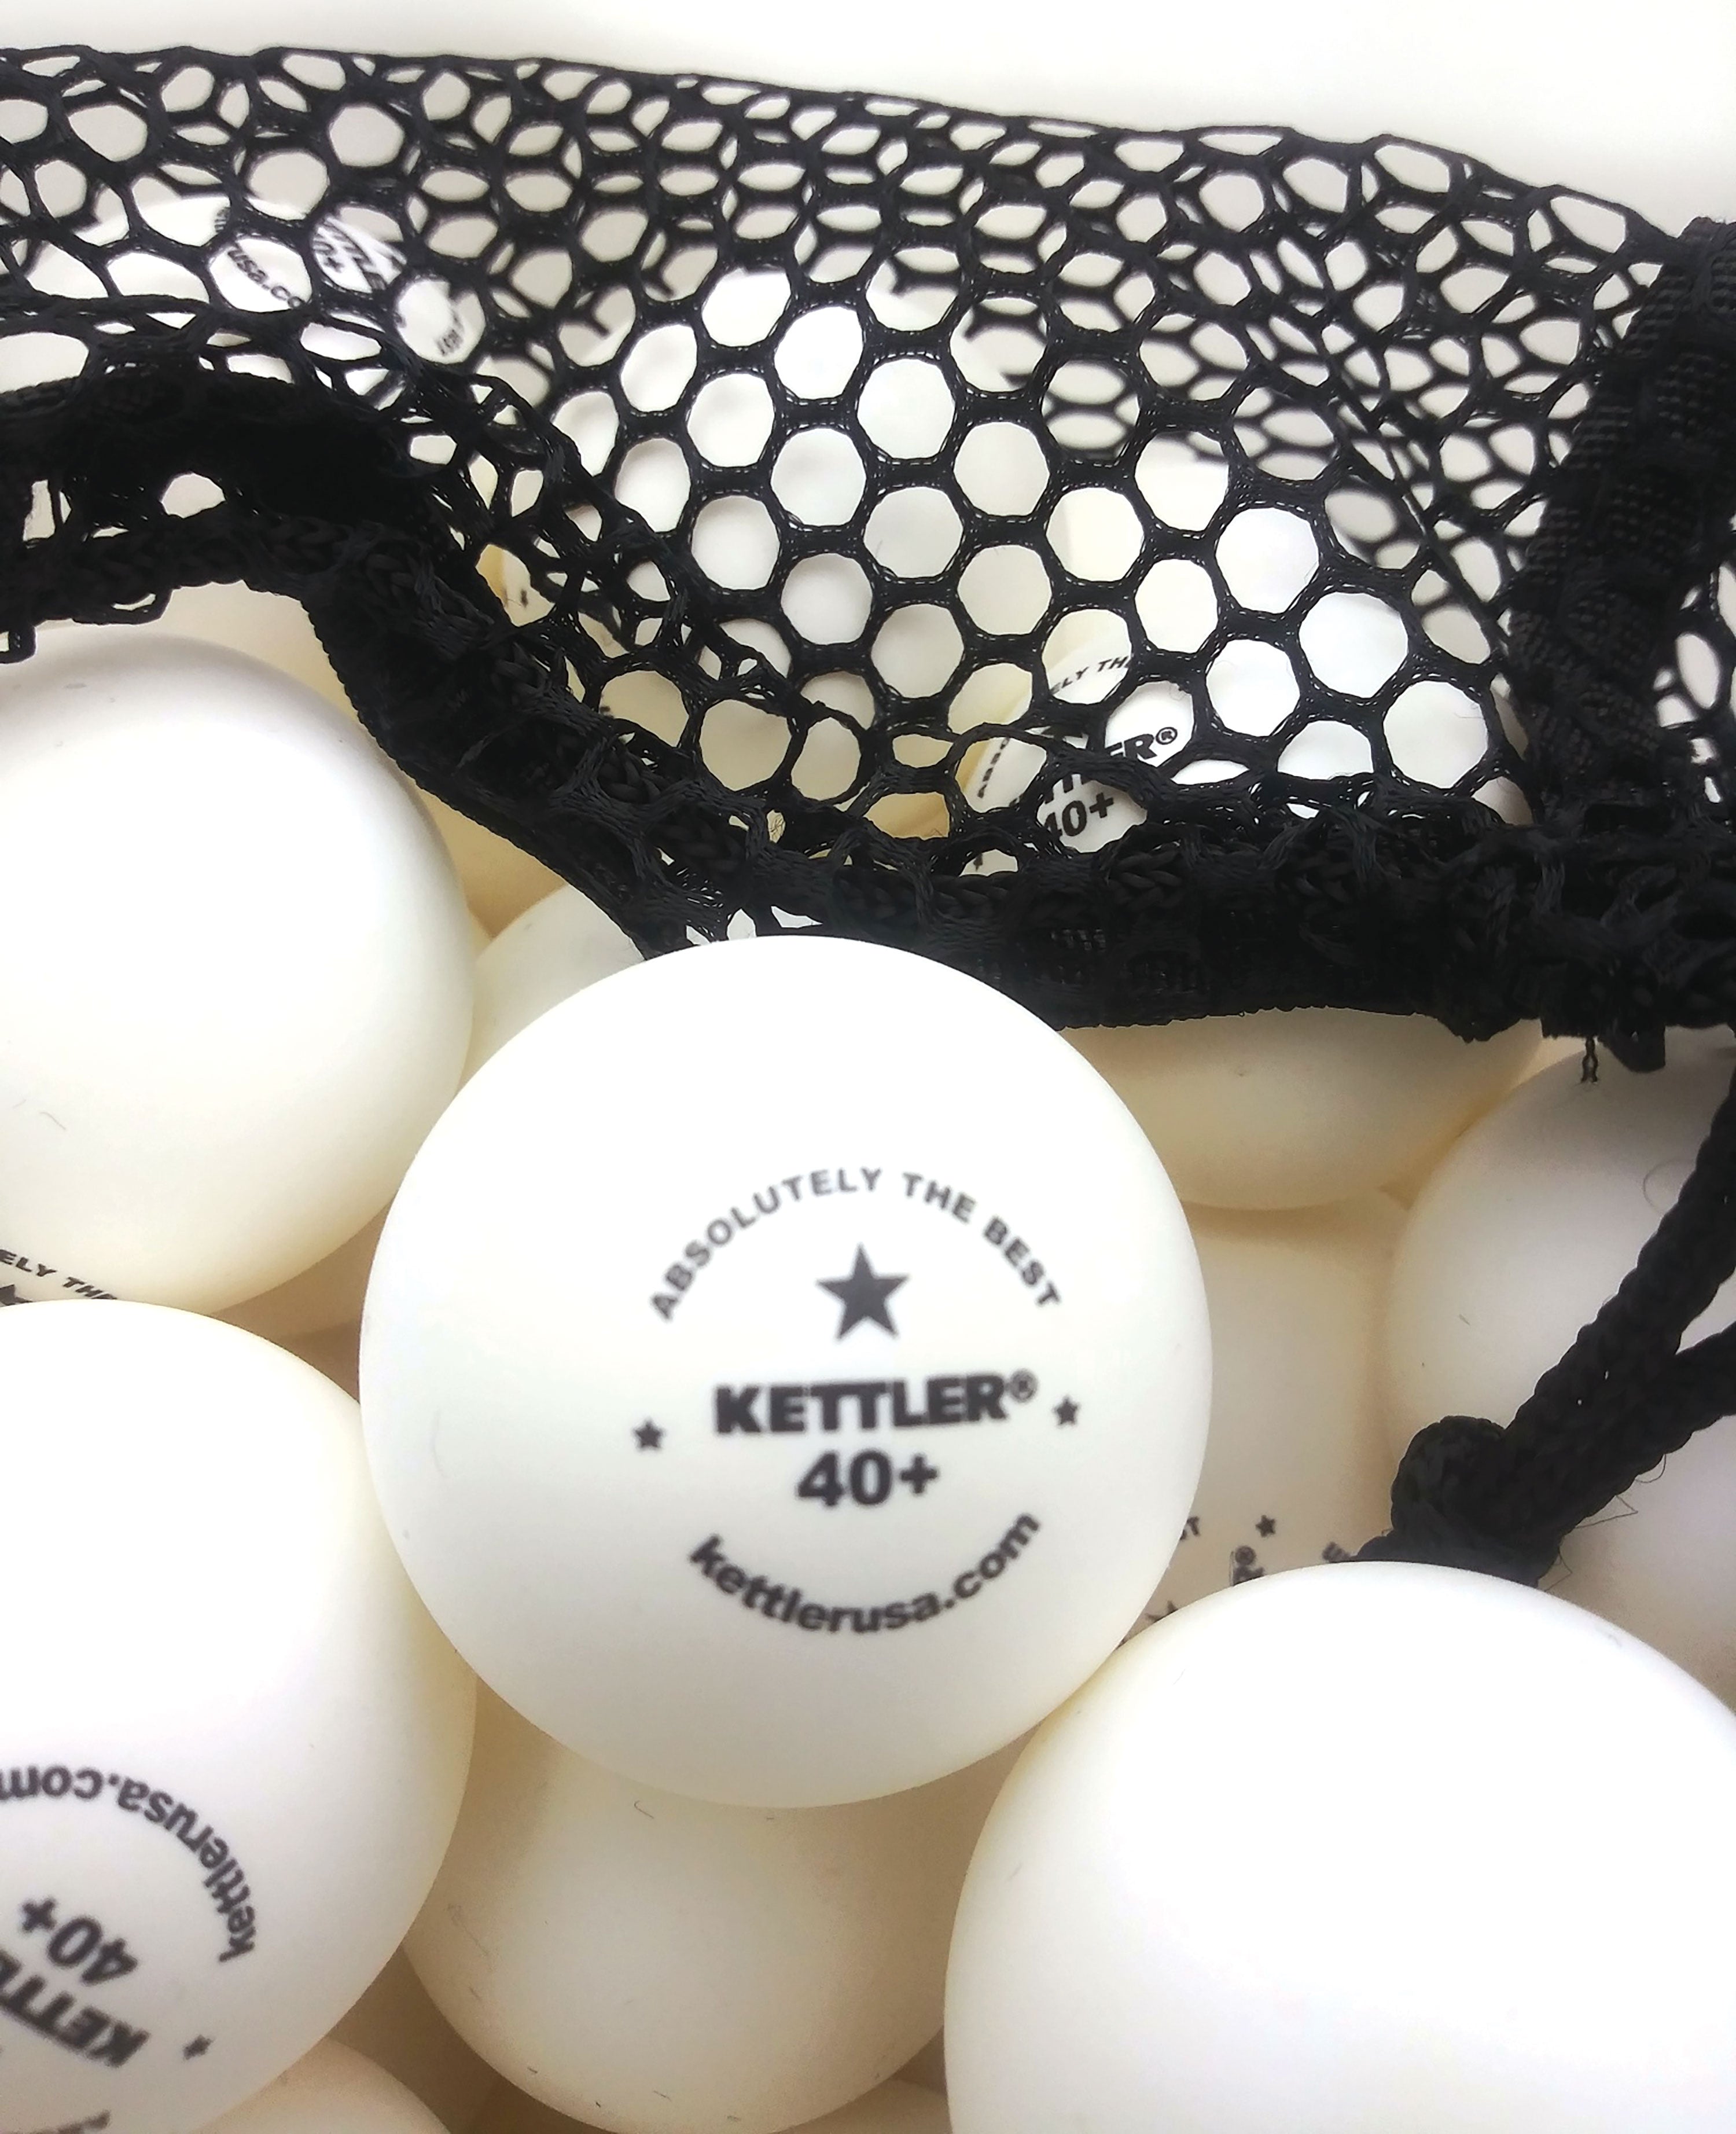 144 Table Tennis Ping Pong Balls in a net bag